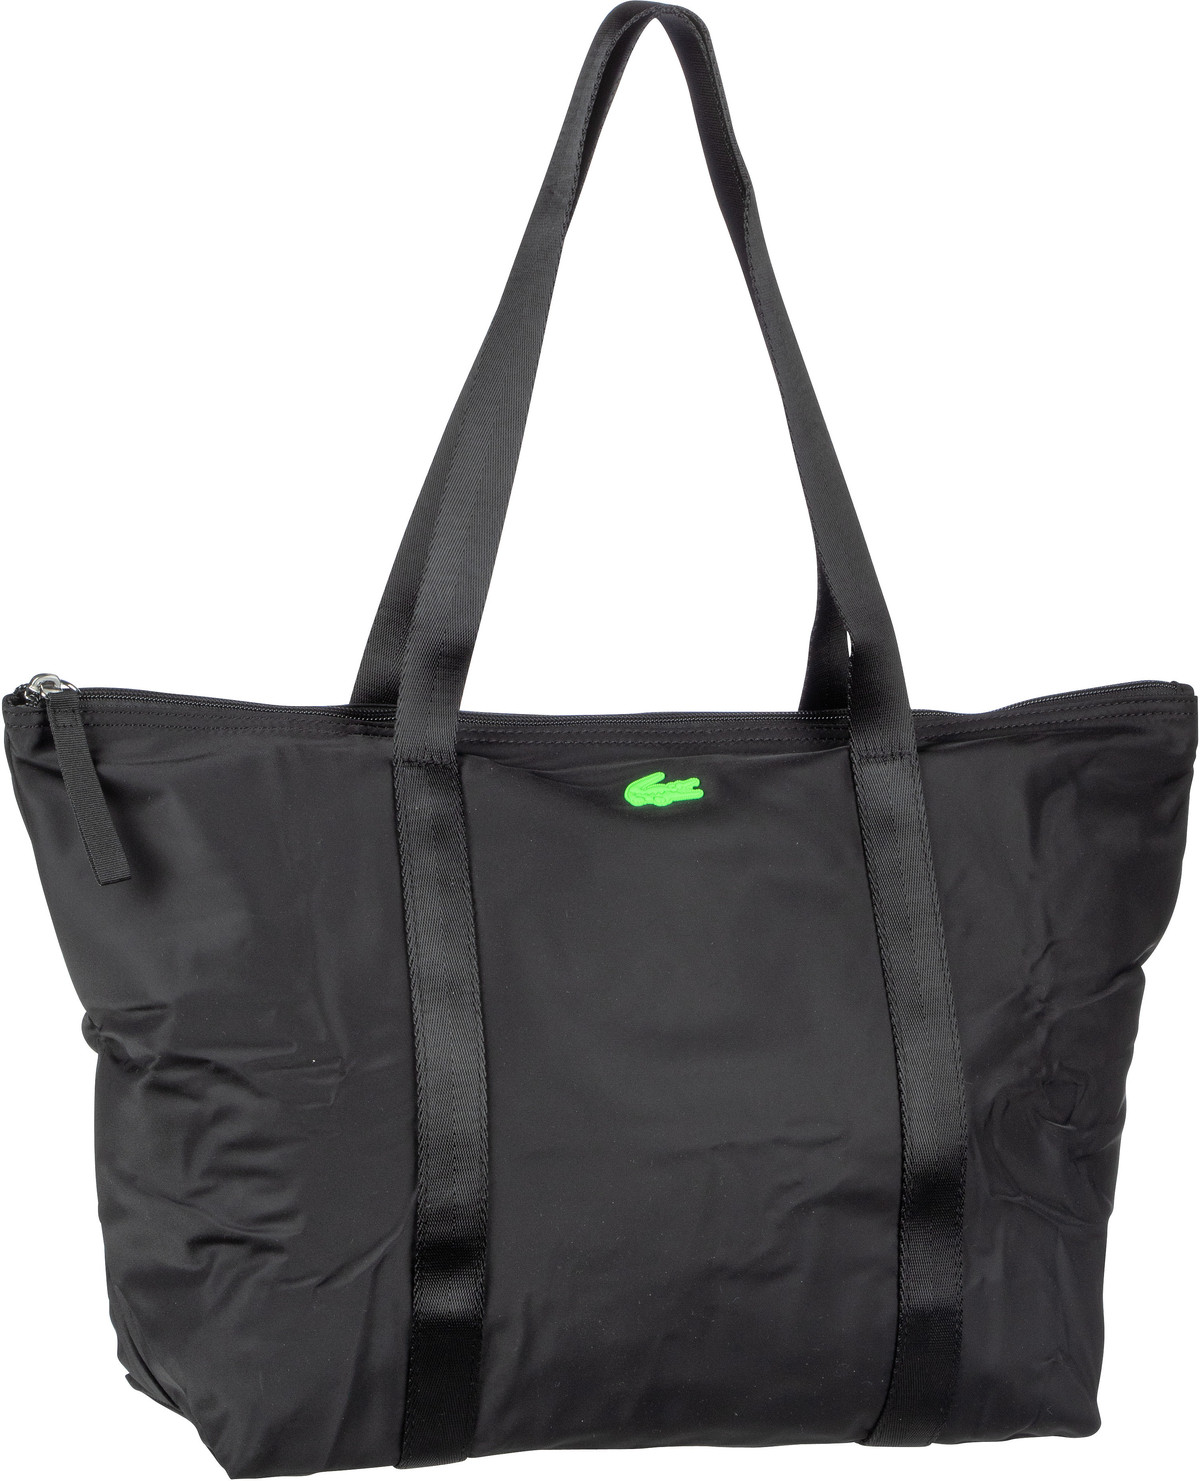 Lacoste Jeanne Shopping Bag L 3618 - Black/Neon Green